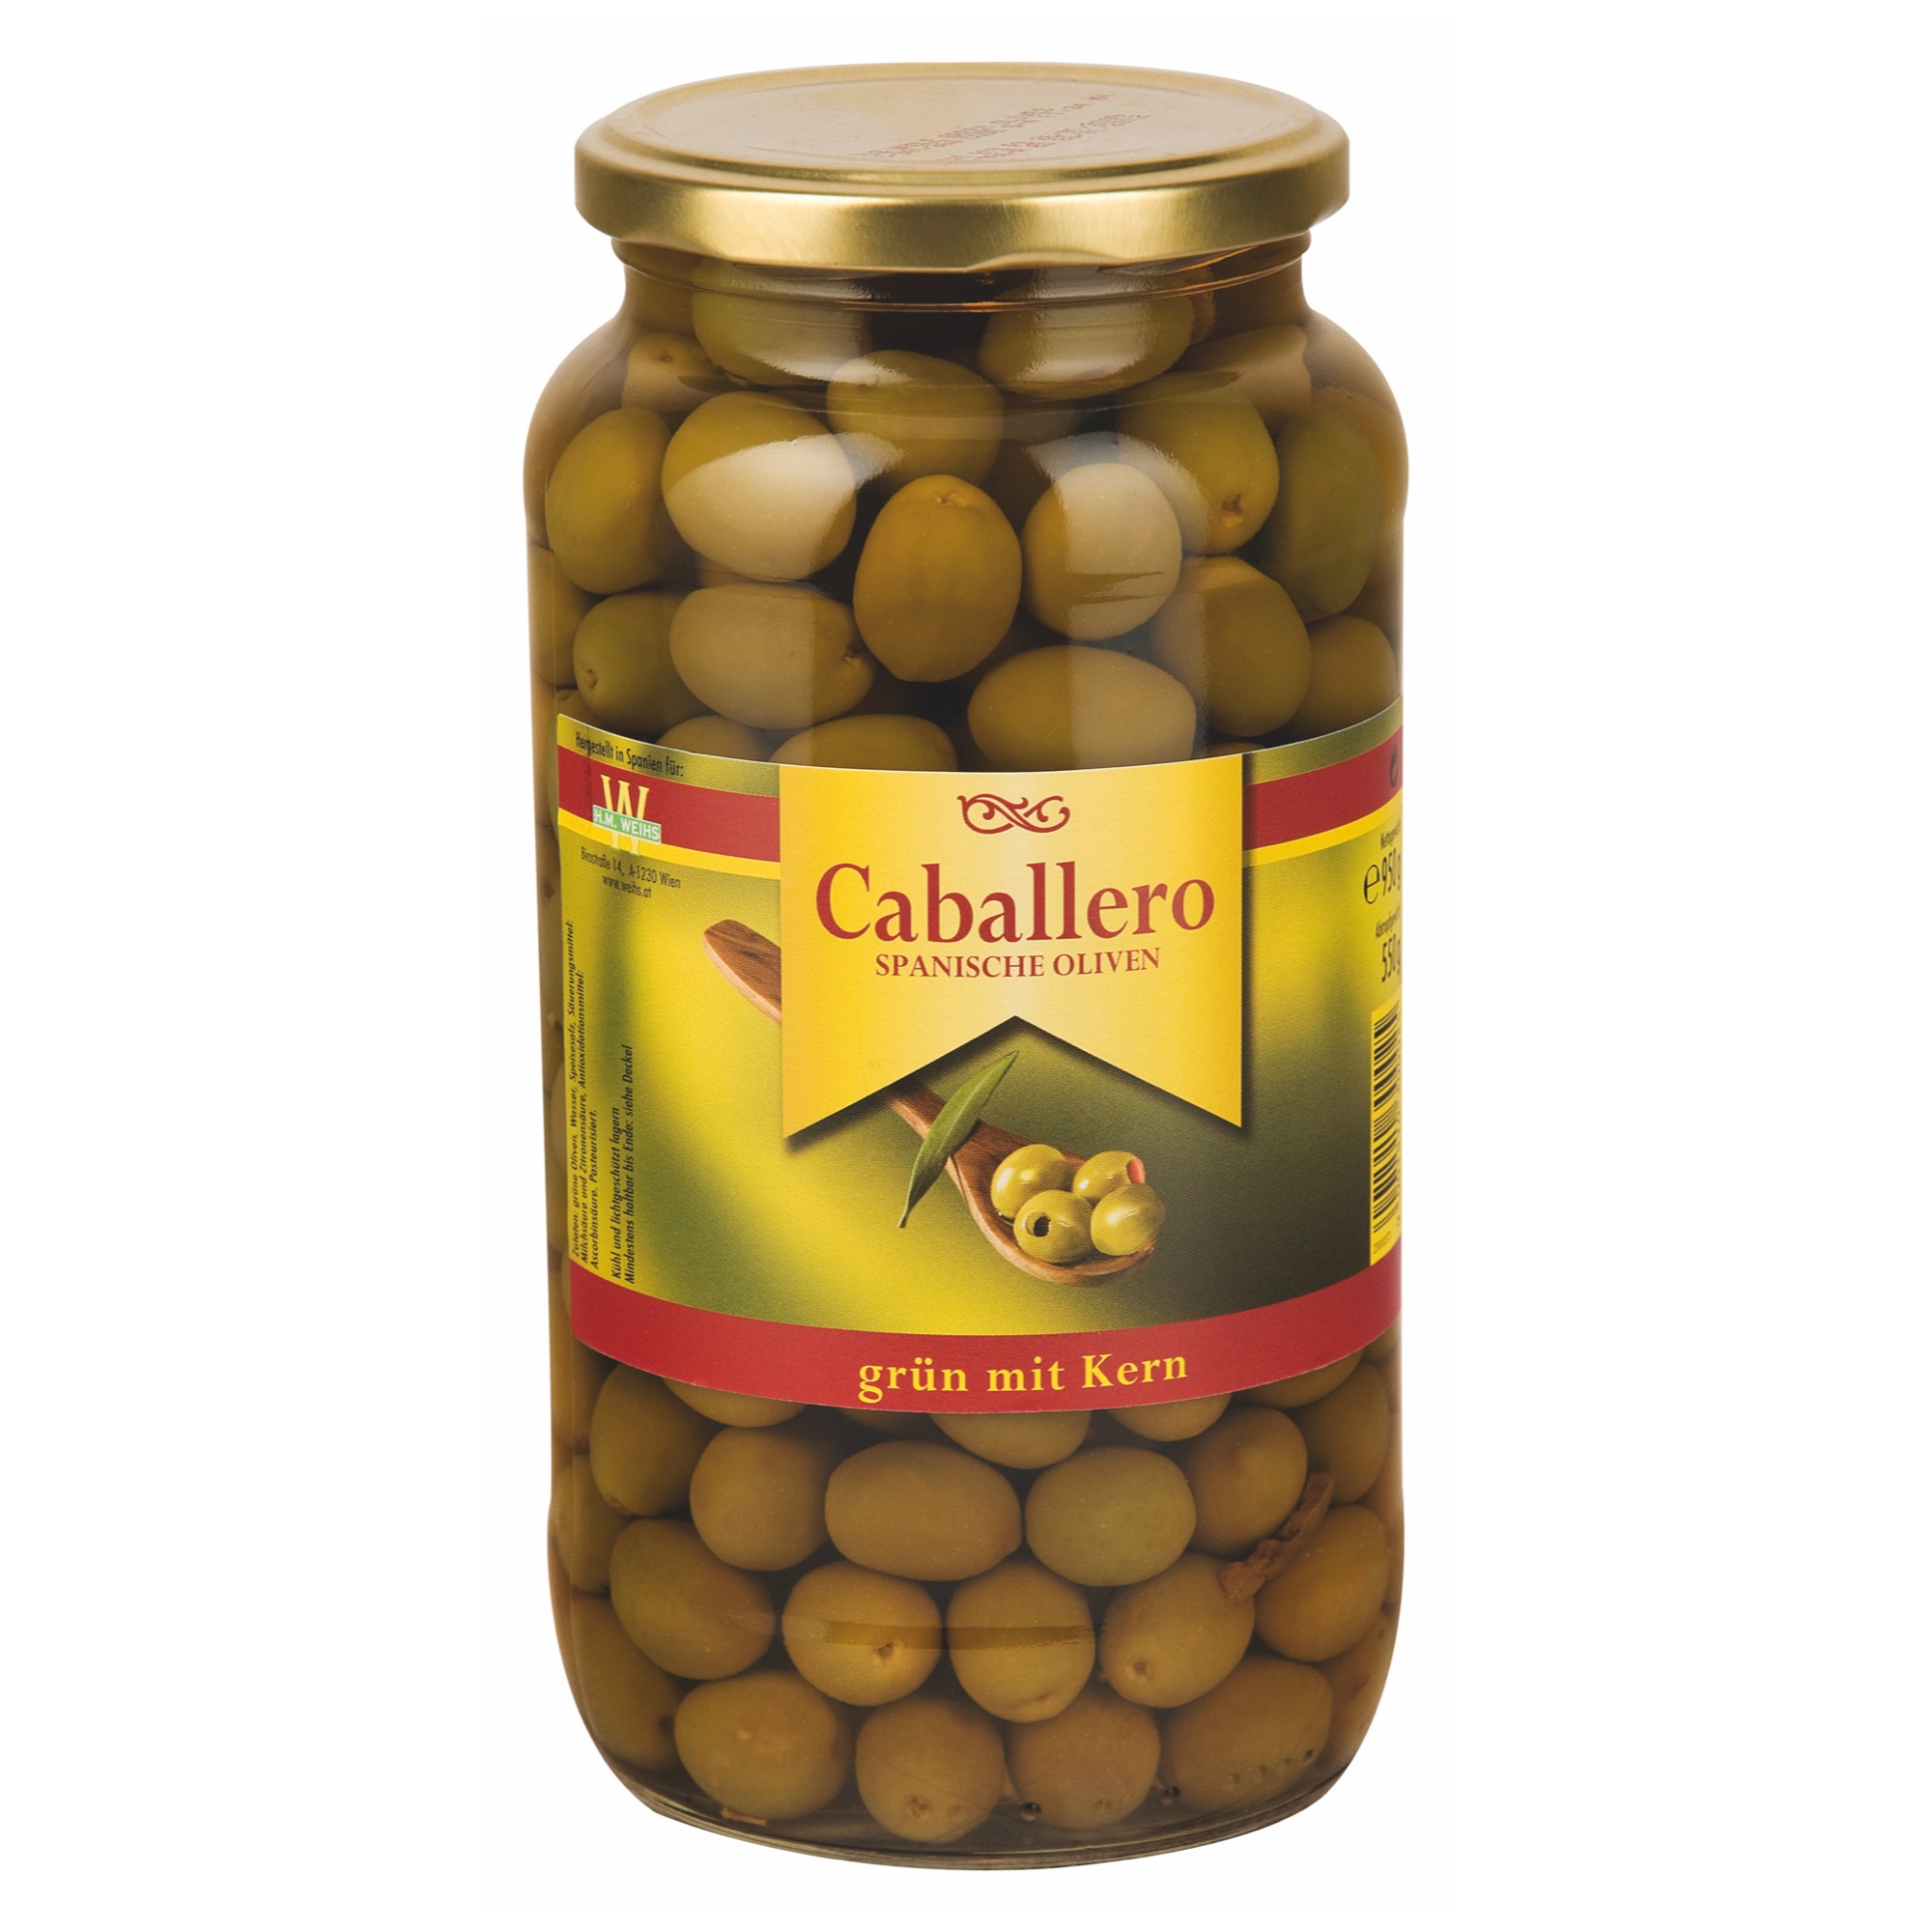 Caball. olivy zel. s kôstkou 340/360 900g